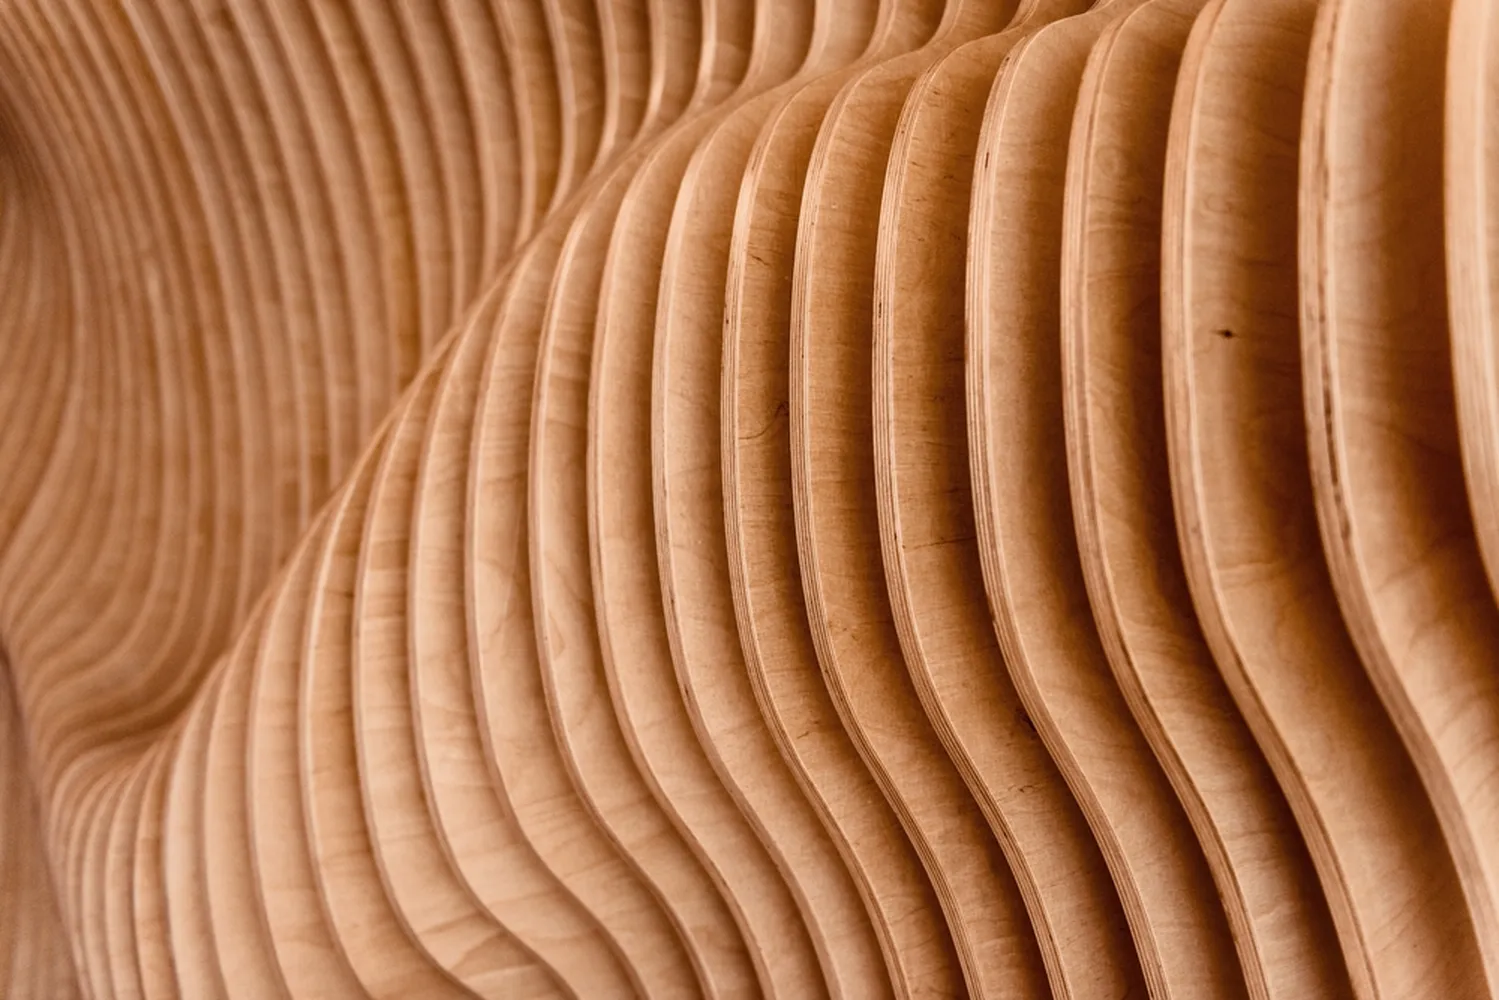 کاغذ دیواری سه بعدی چوبی طرح فراکتال